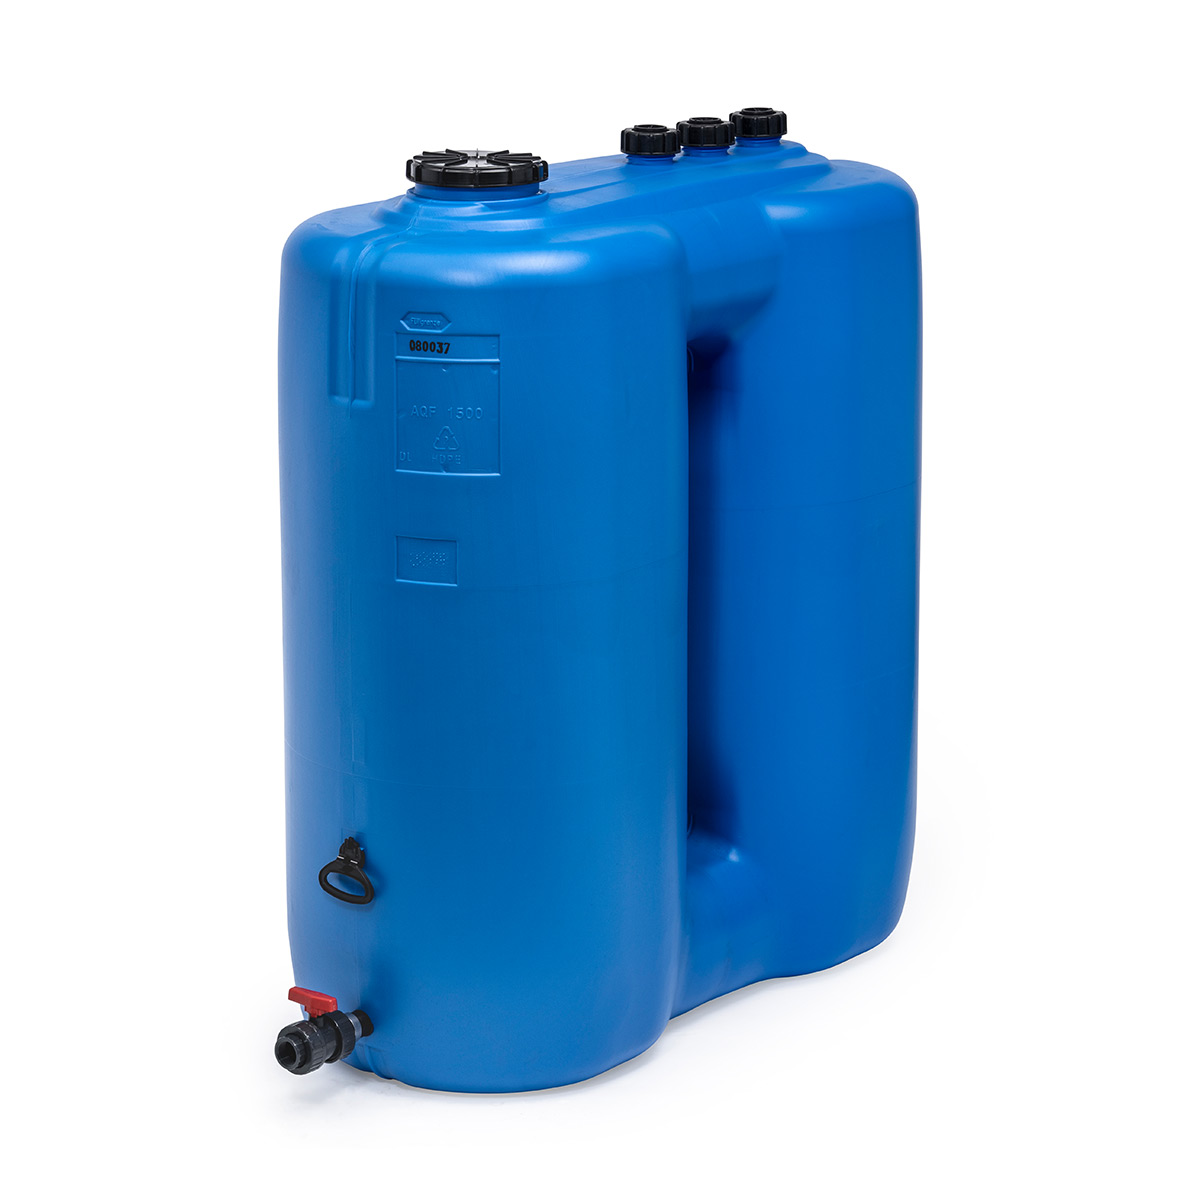 Lagertank AQF blau, 1100 l, aus PE-HD, Trinkwasser geeignet